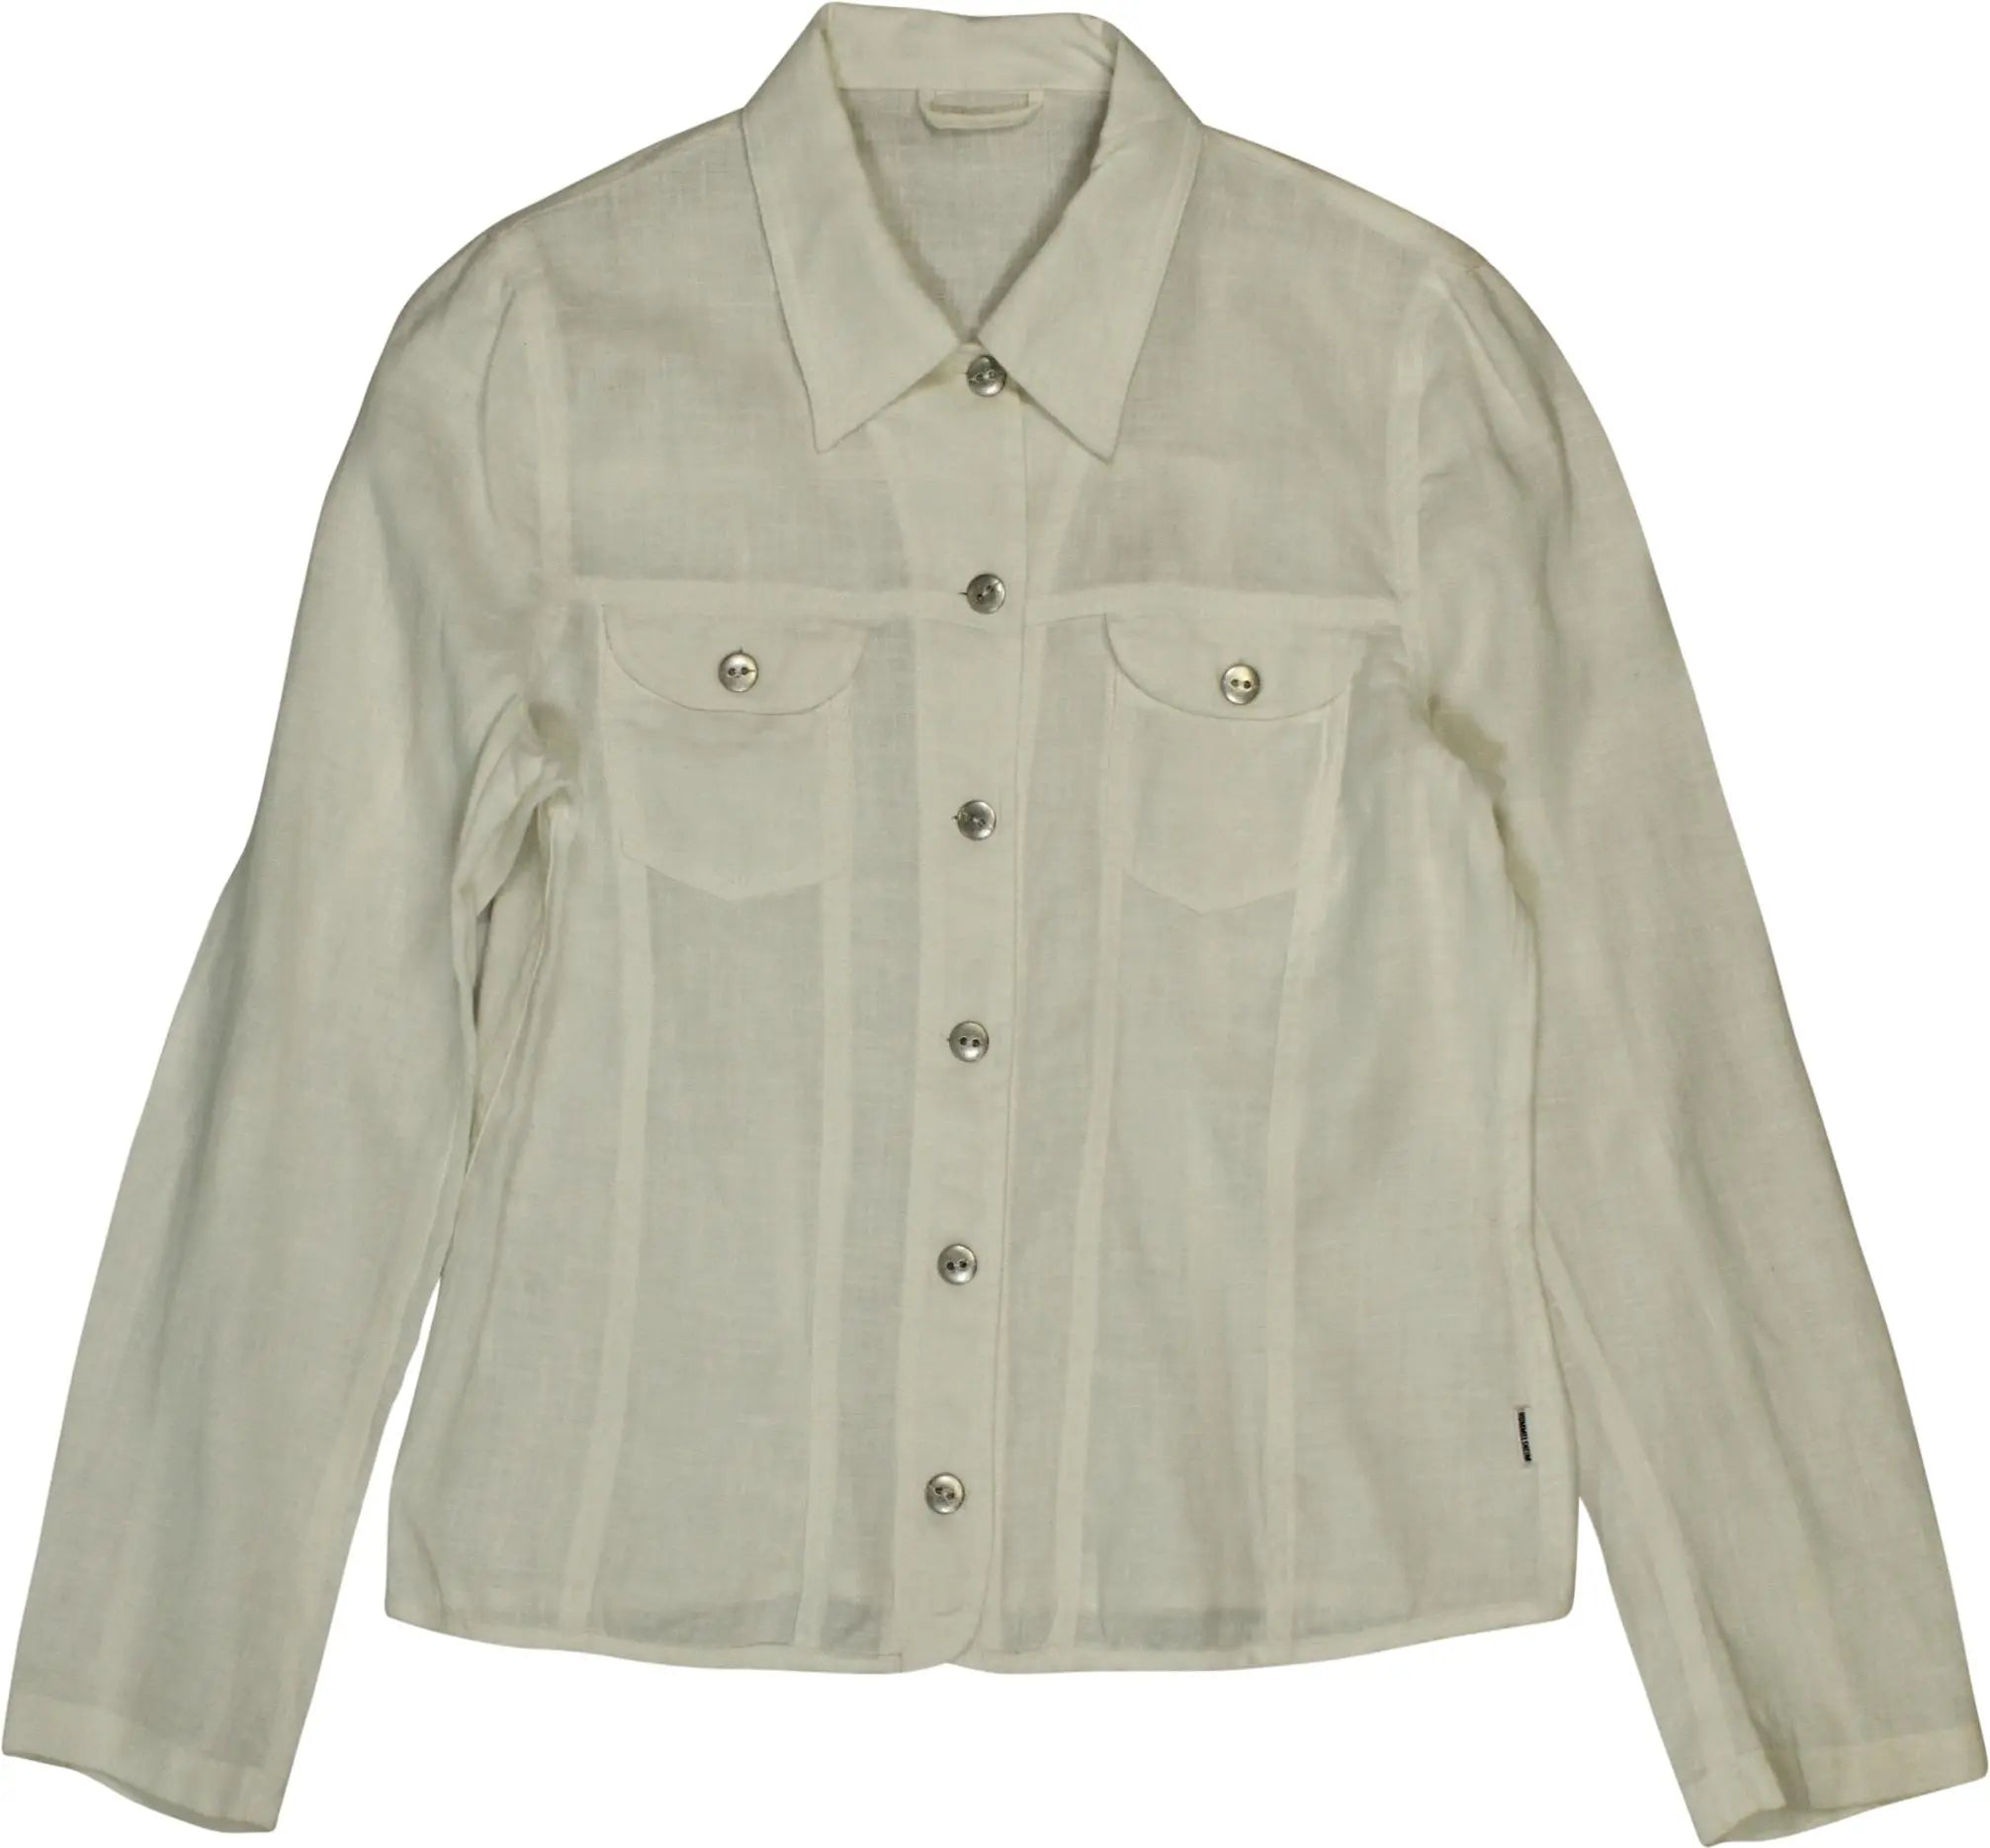 Hummelsheim - Linen Shirt- ThriftTale.com - Vintage and second handclothing